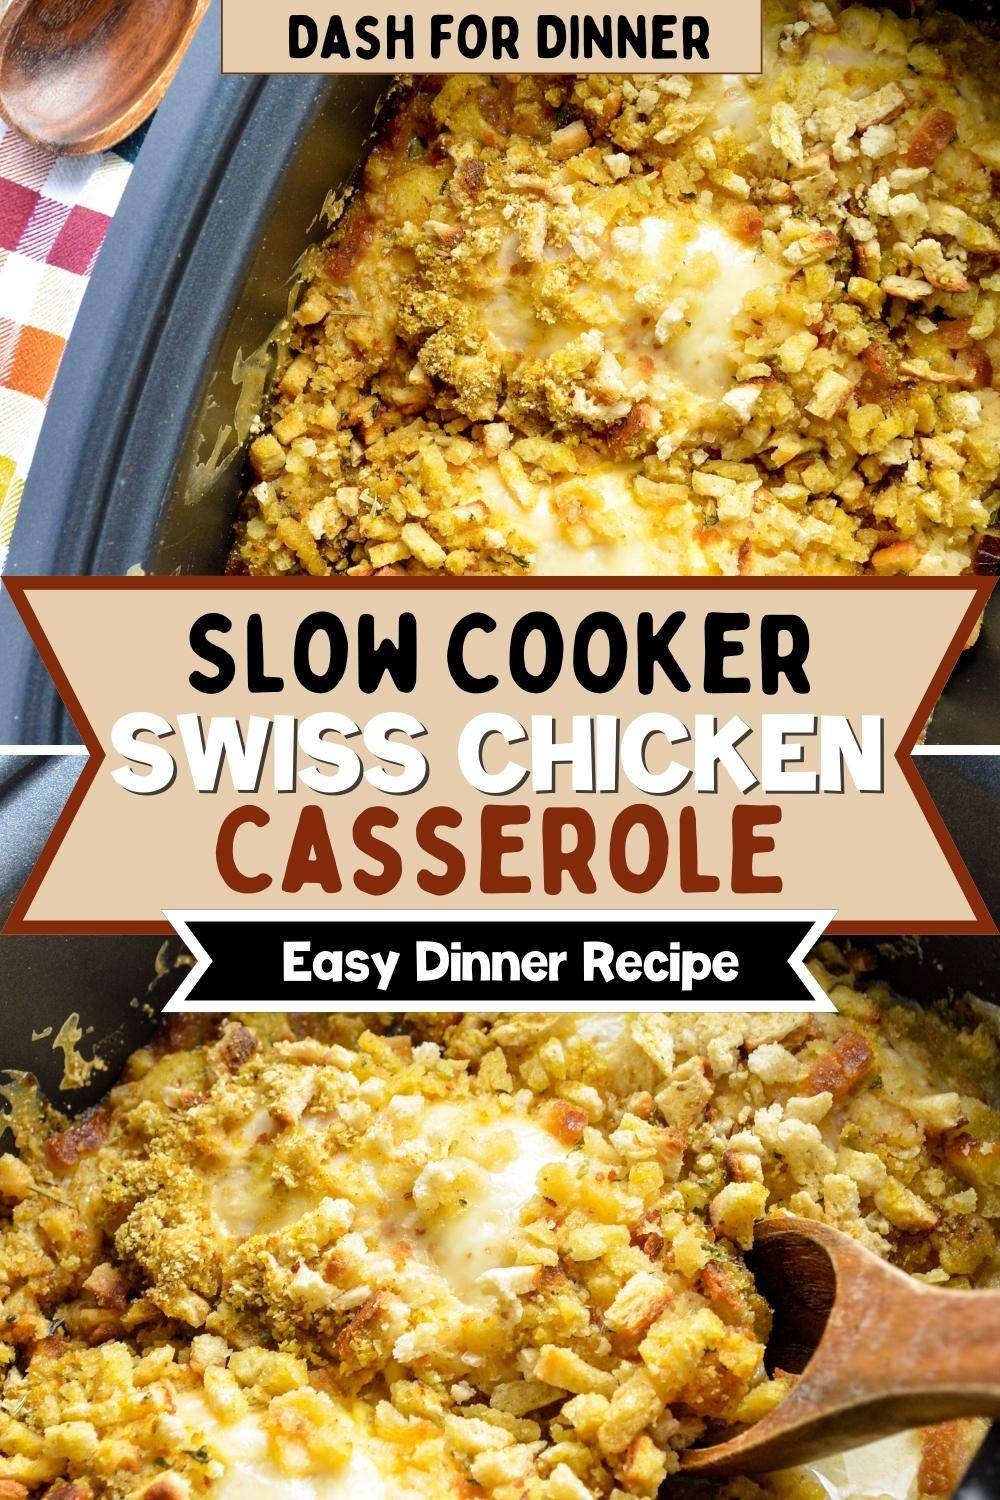 Slow Cooker Swiss Chicken Casserole - Dash for Dinner